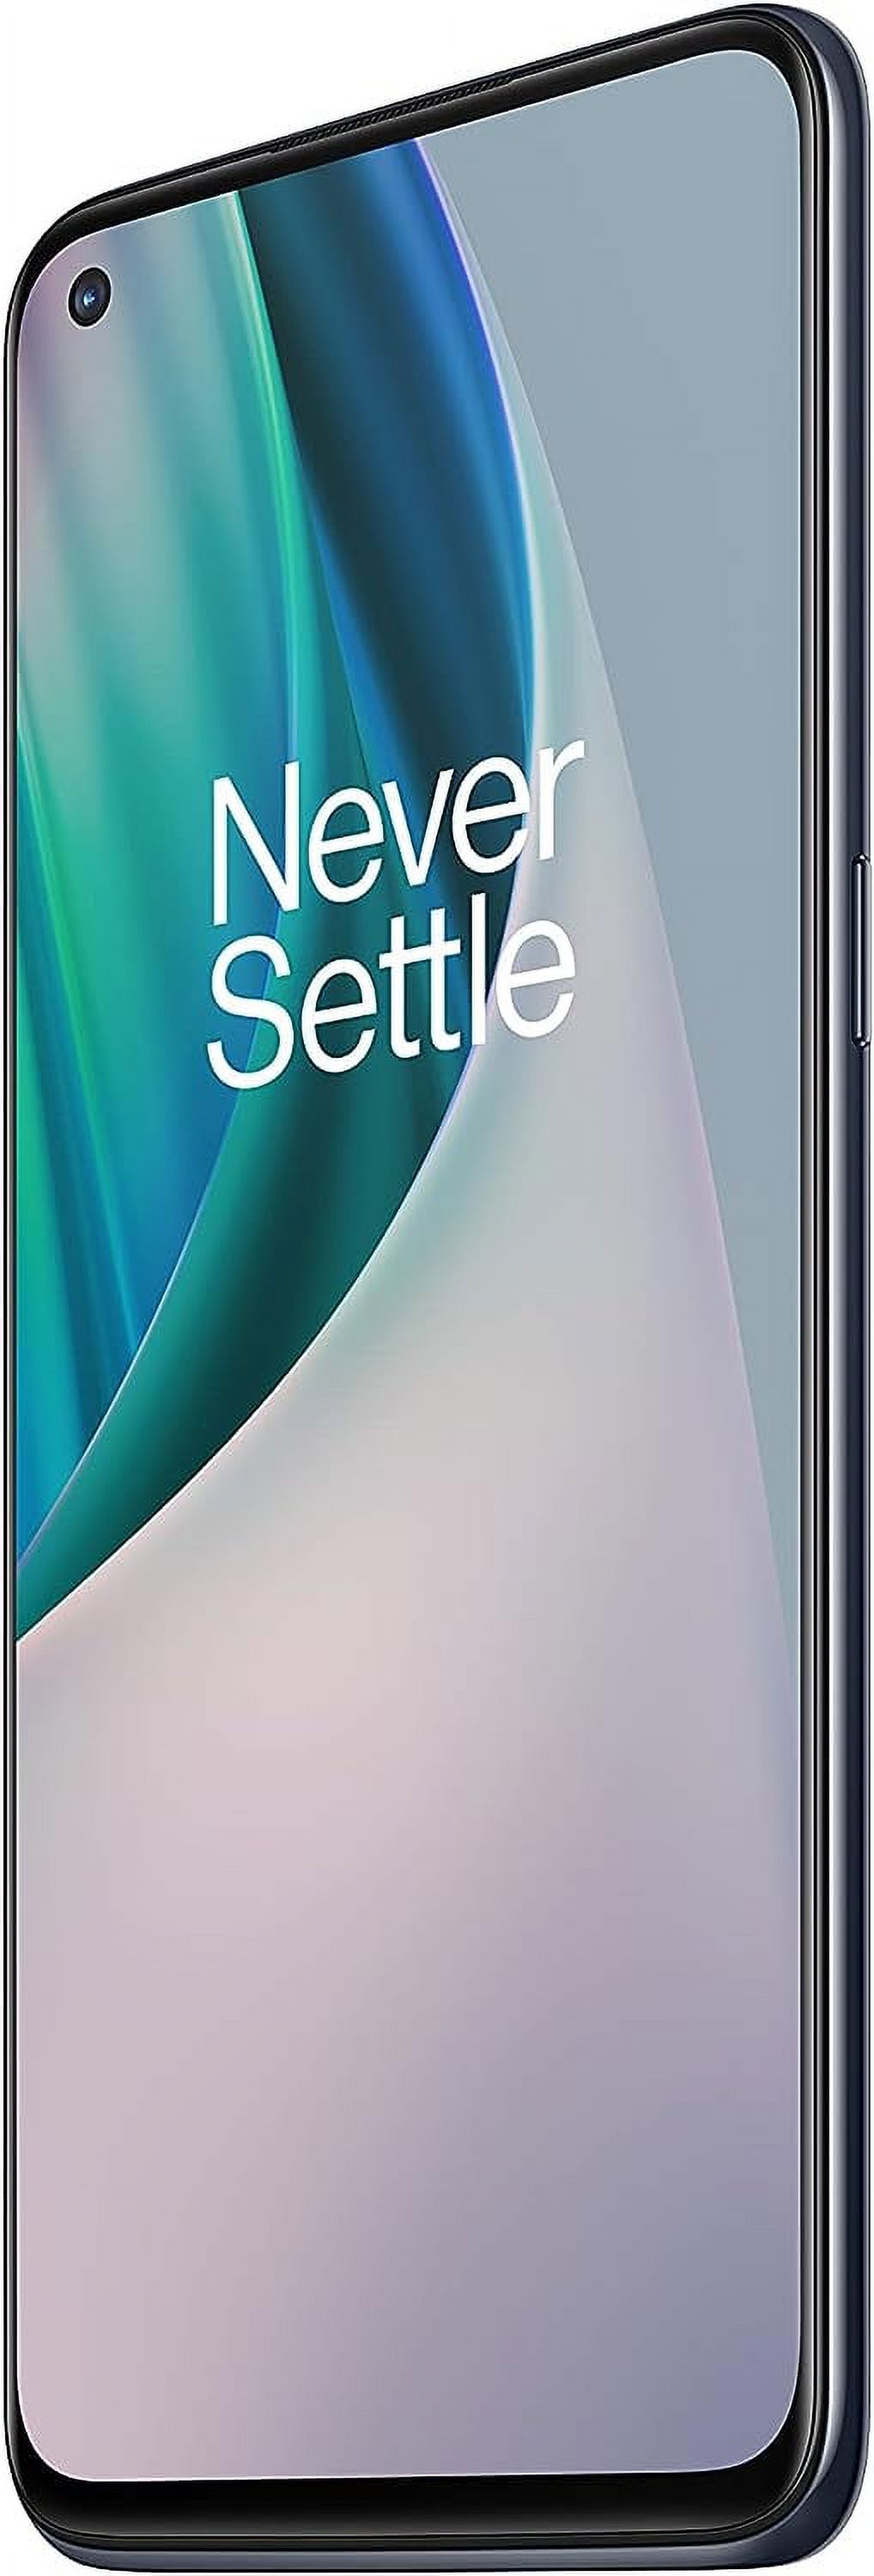 OnePlus Nord N10 128GB 5G Dual SIM 6GB RAM GSM Factory Unlocked Smartphone, Midnight Ice (International Version) - image 3 of 5